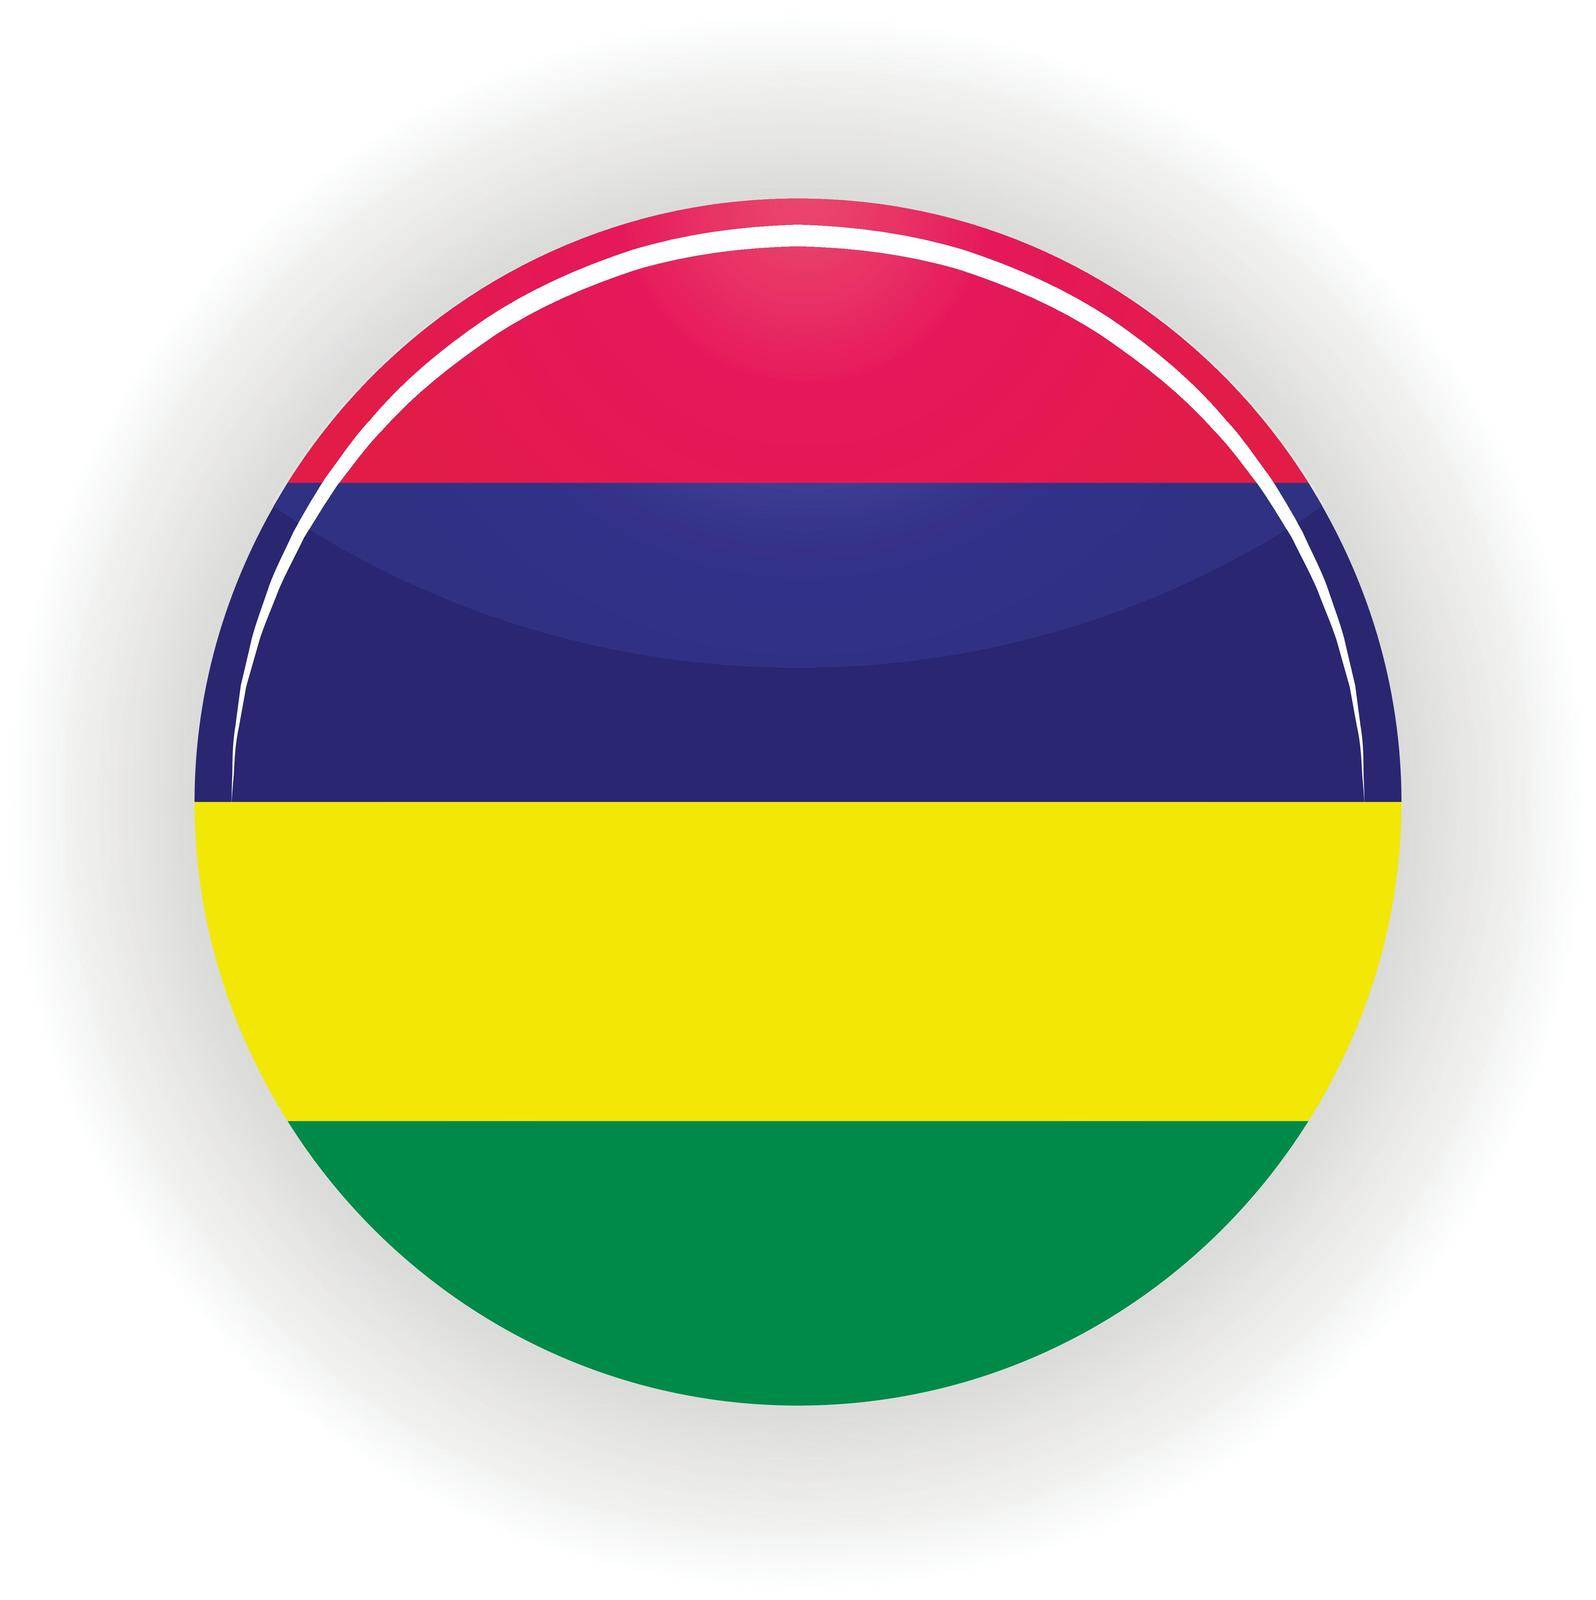 Mauritius icon circle isolated on white background. Port Louis icon vector illustration